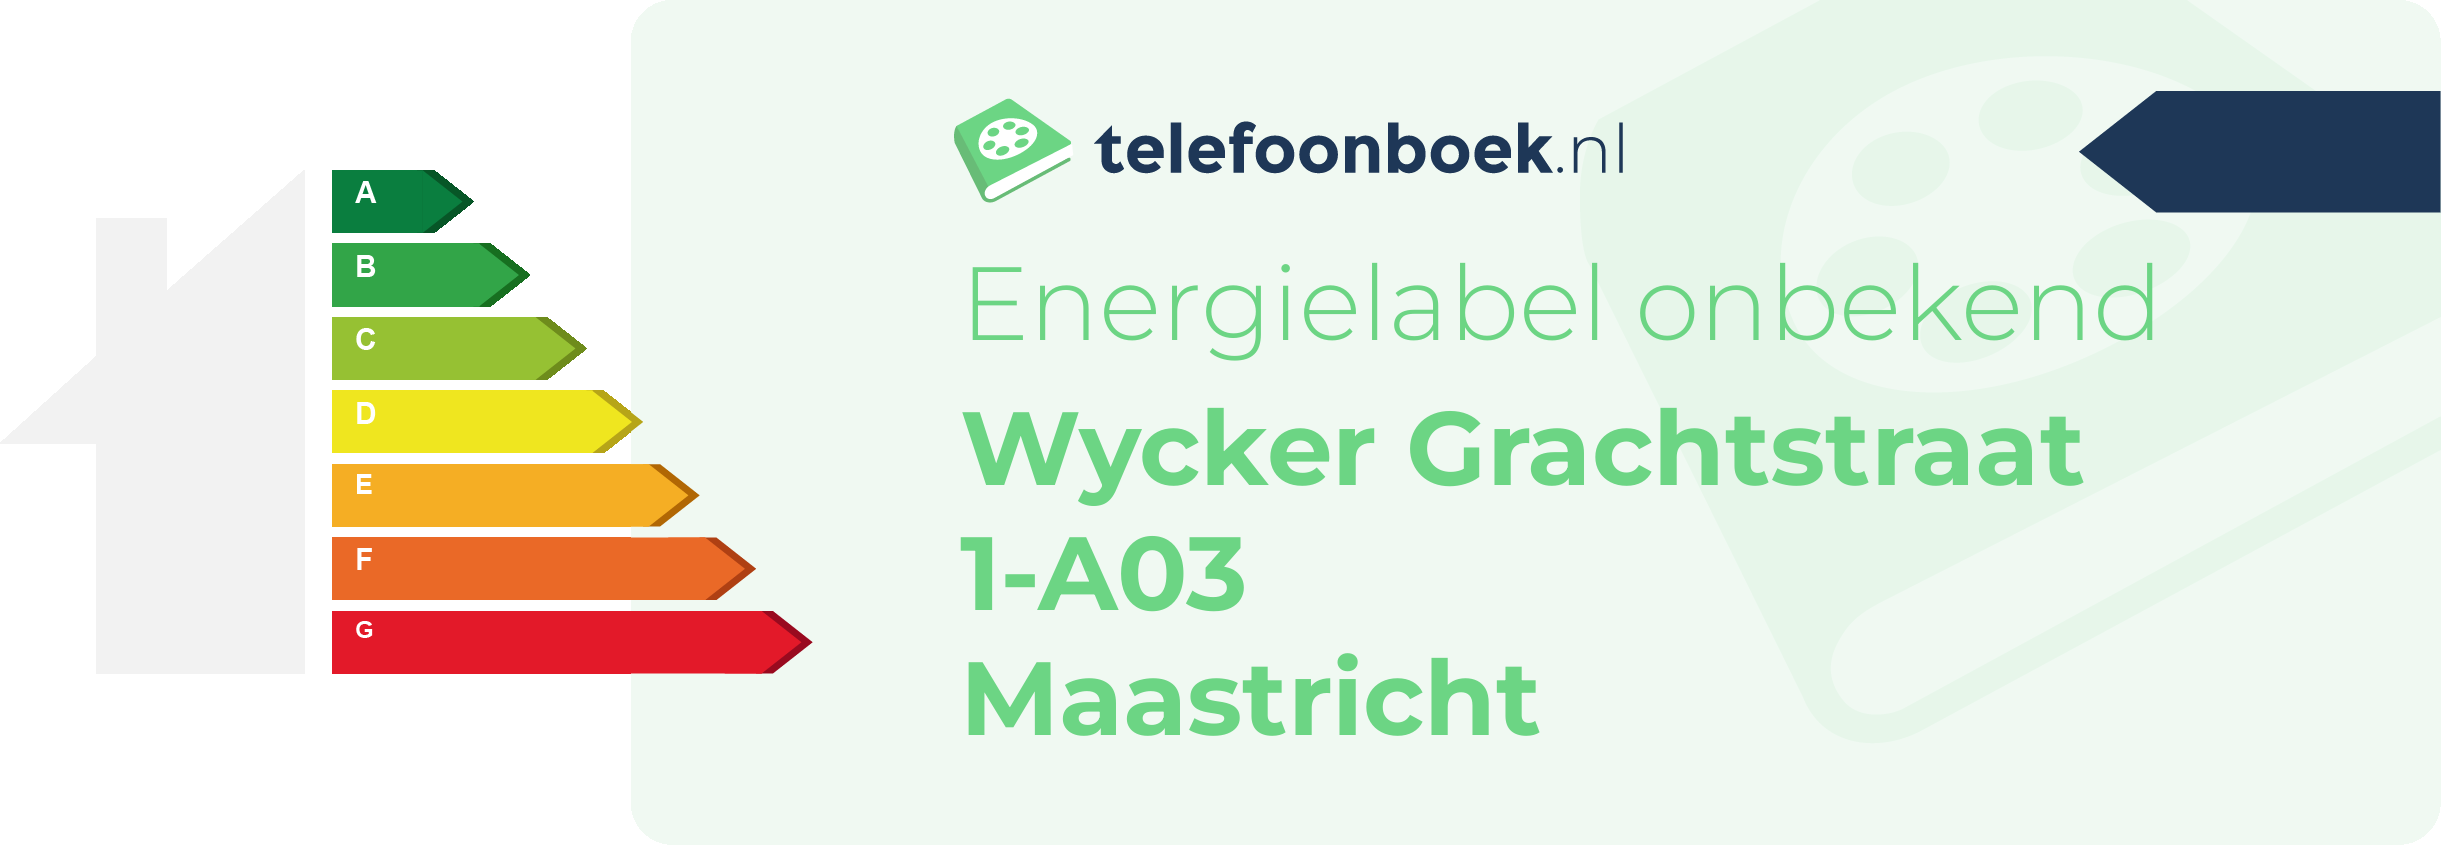 Energielabel Wycker Grachtstraat 1-A03 Maastricht